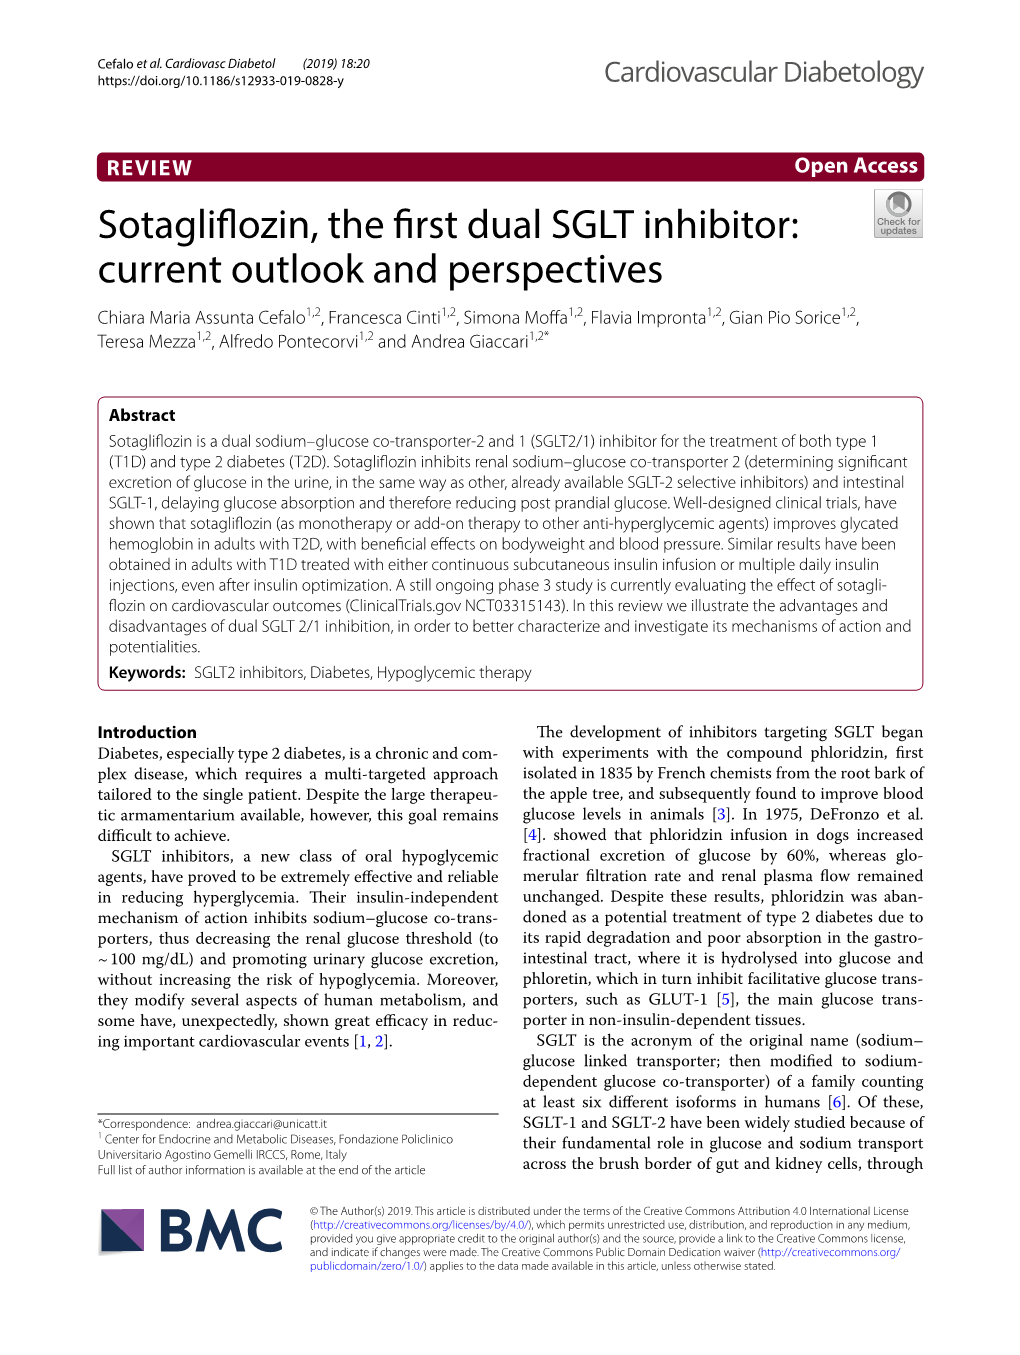 Sotagliflozin, the First Dual SGLT Inhibitor